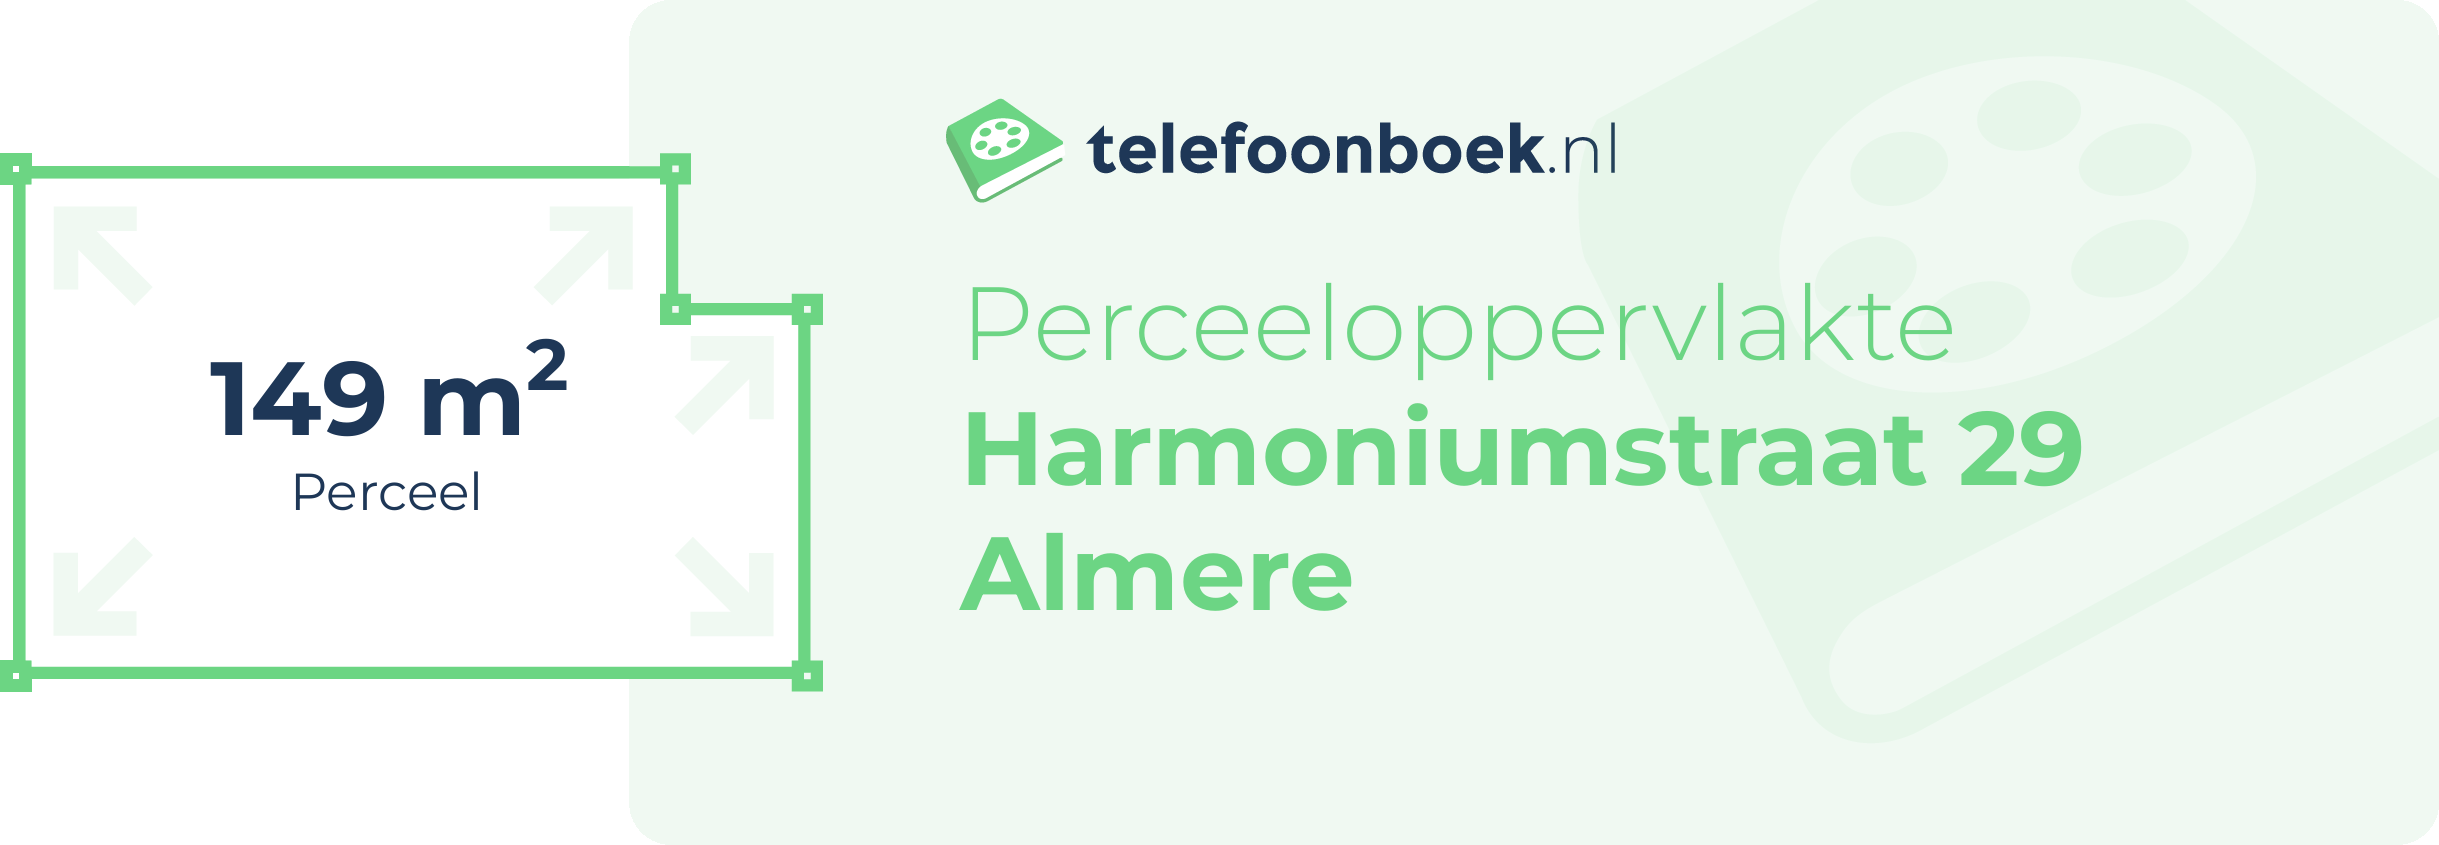 Perceeloppervlakte Harmoniumstraat 29 Almere